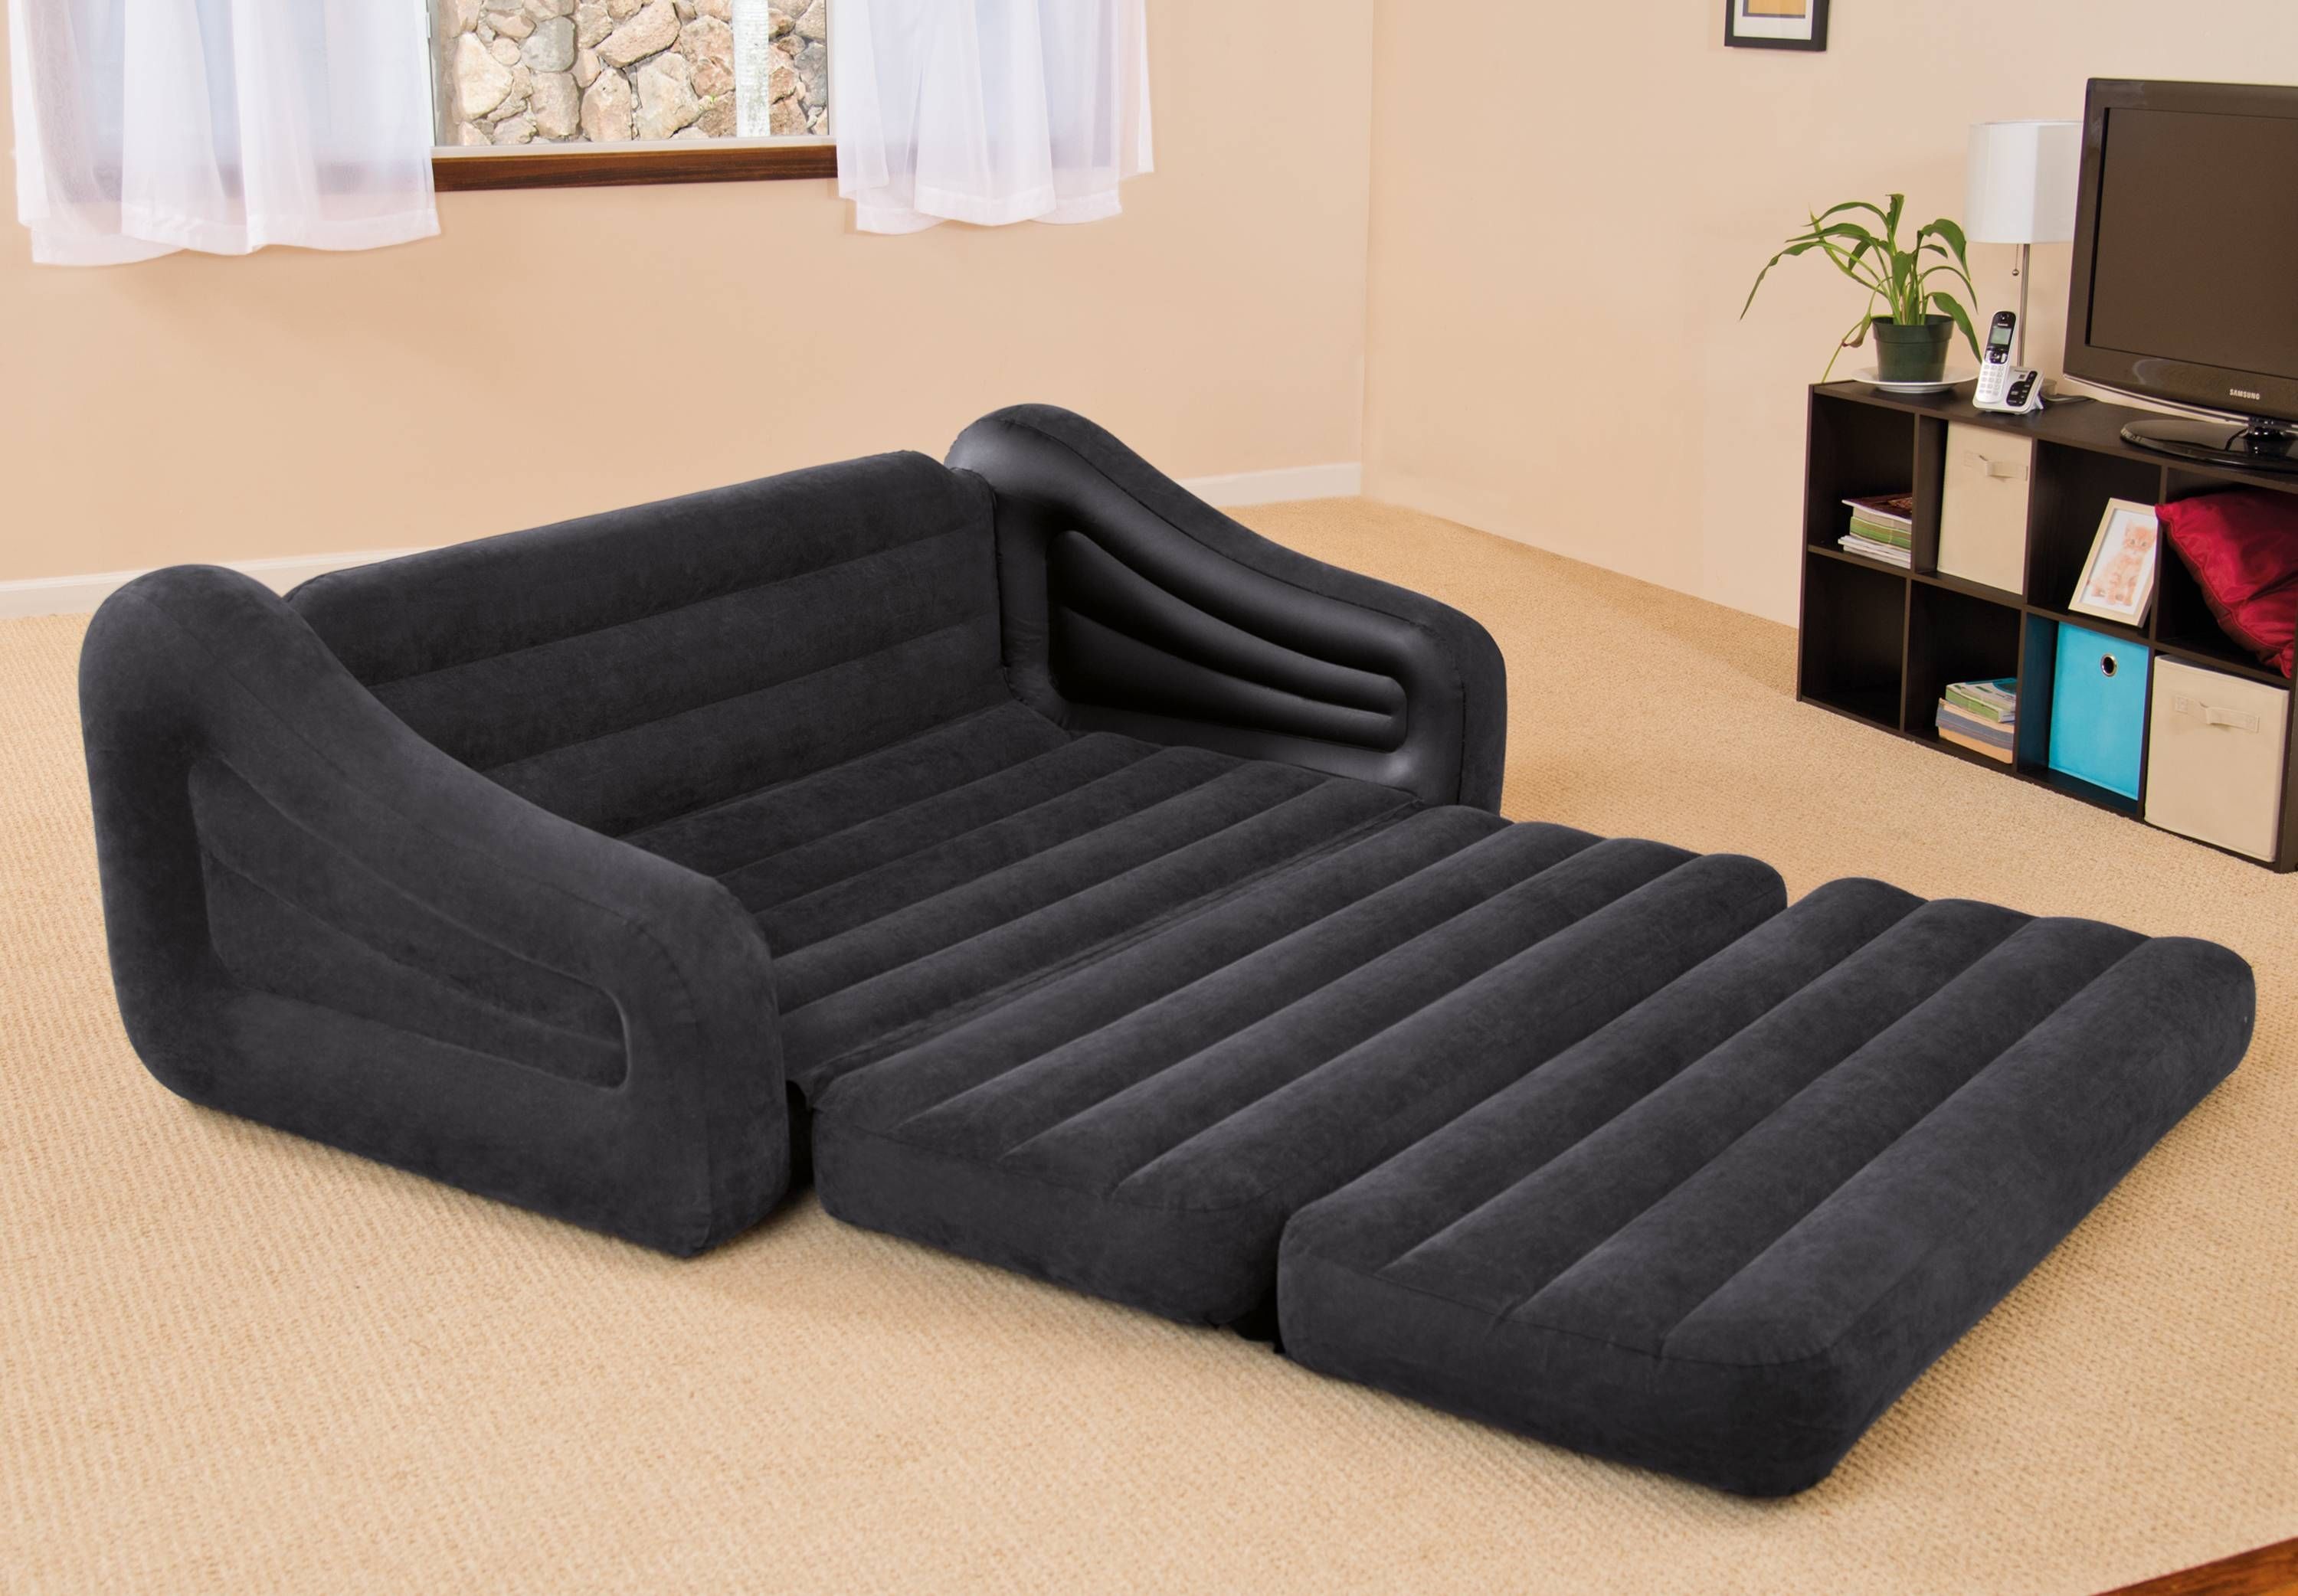 Intex Inflatable Pull Out Sofa & Queen Bed Mattress Sleeper W/ Ac Regarding Intex Queen Sleeper Sofas (View 4 of 15)